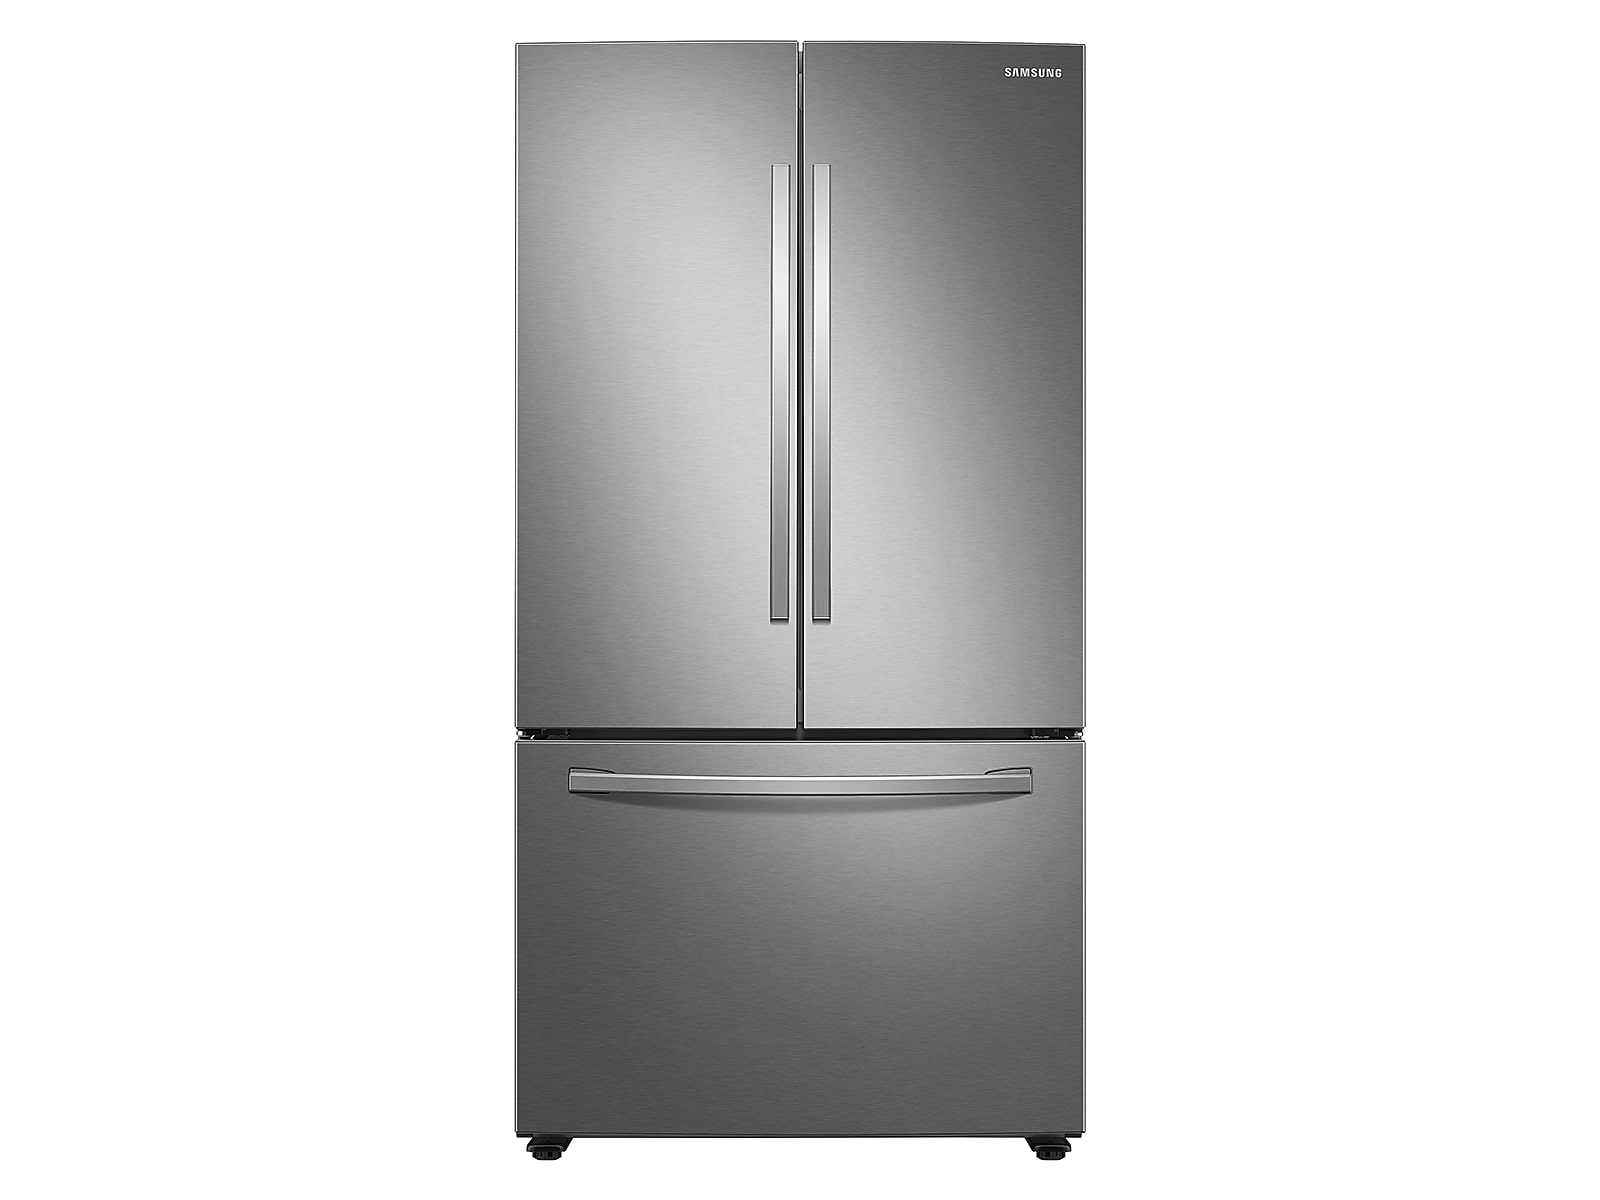 Samsung 28 cu. ft. Large Capacity 3-Door French Door Refrigerator with Internal Water Dispenser in Silver(RF28T5101SR/AA)